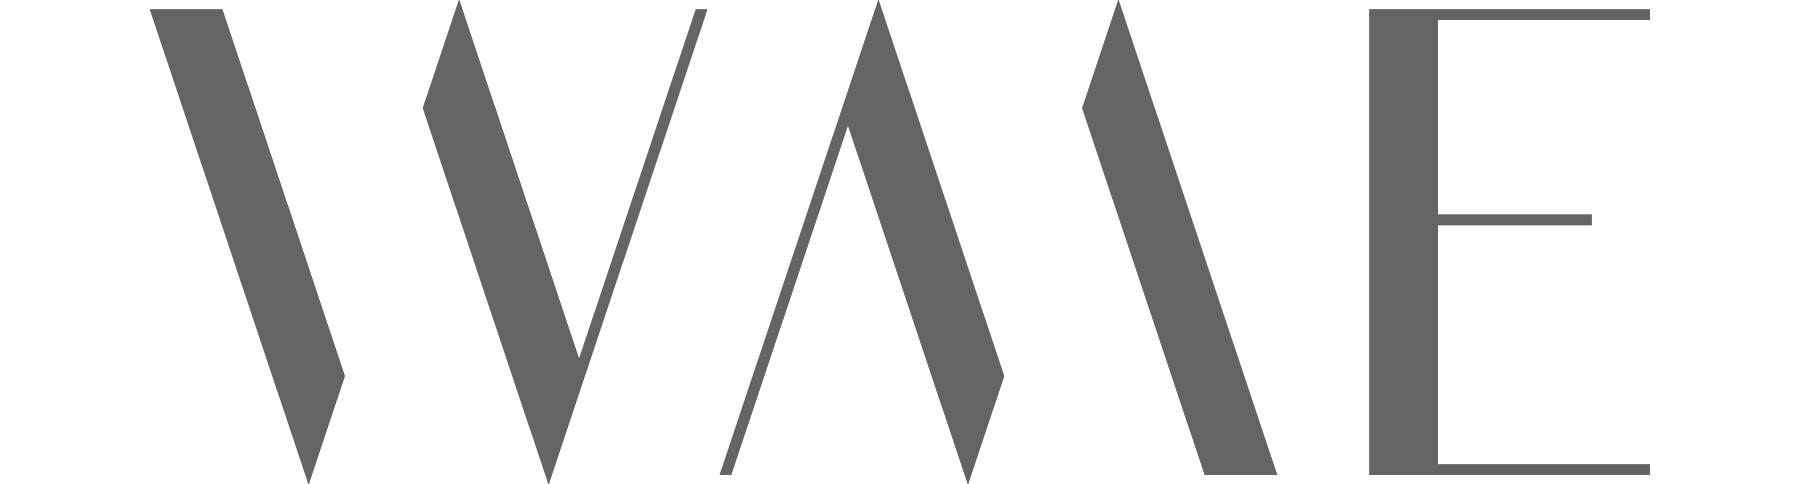 WME logo.png